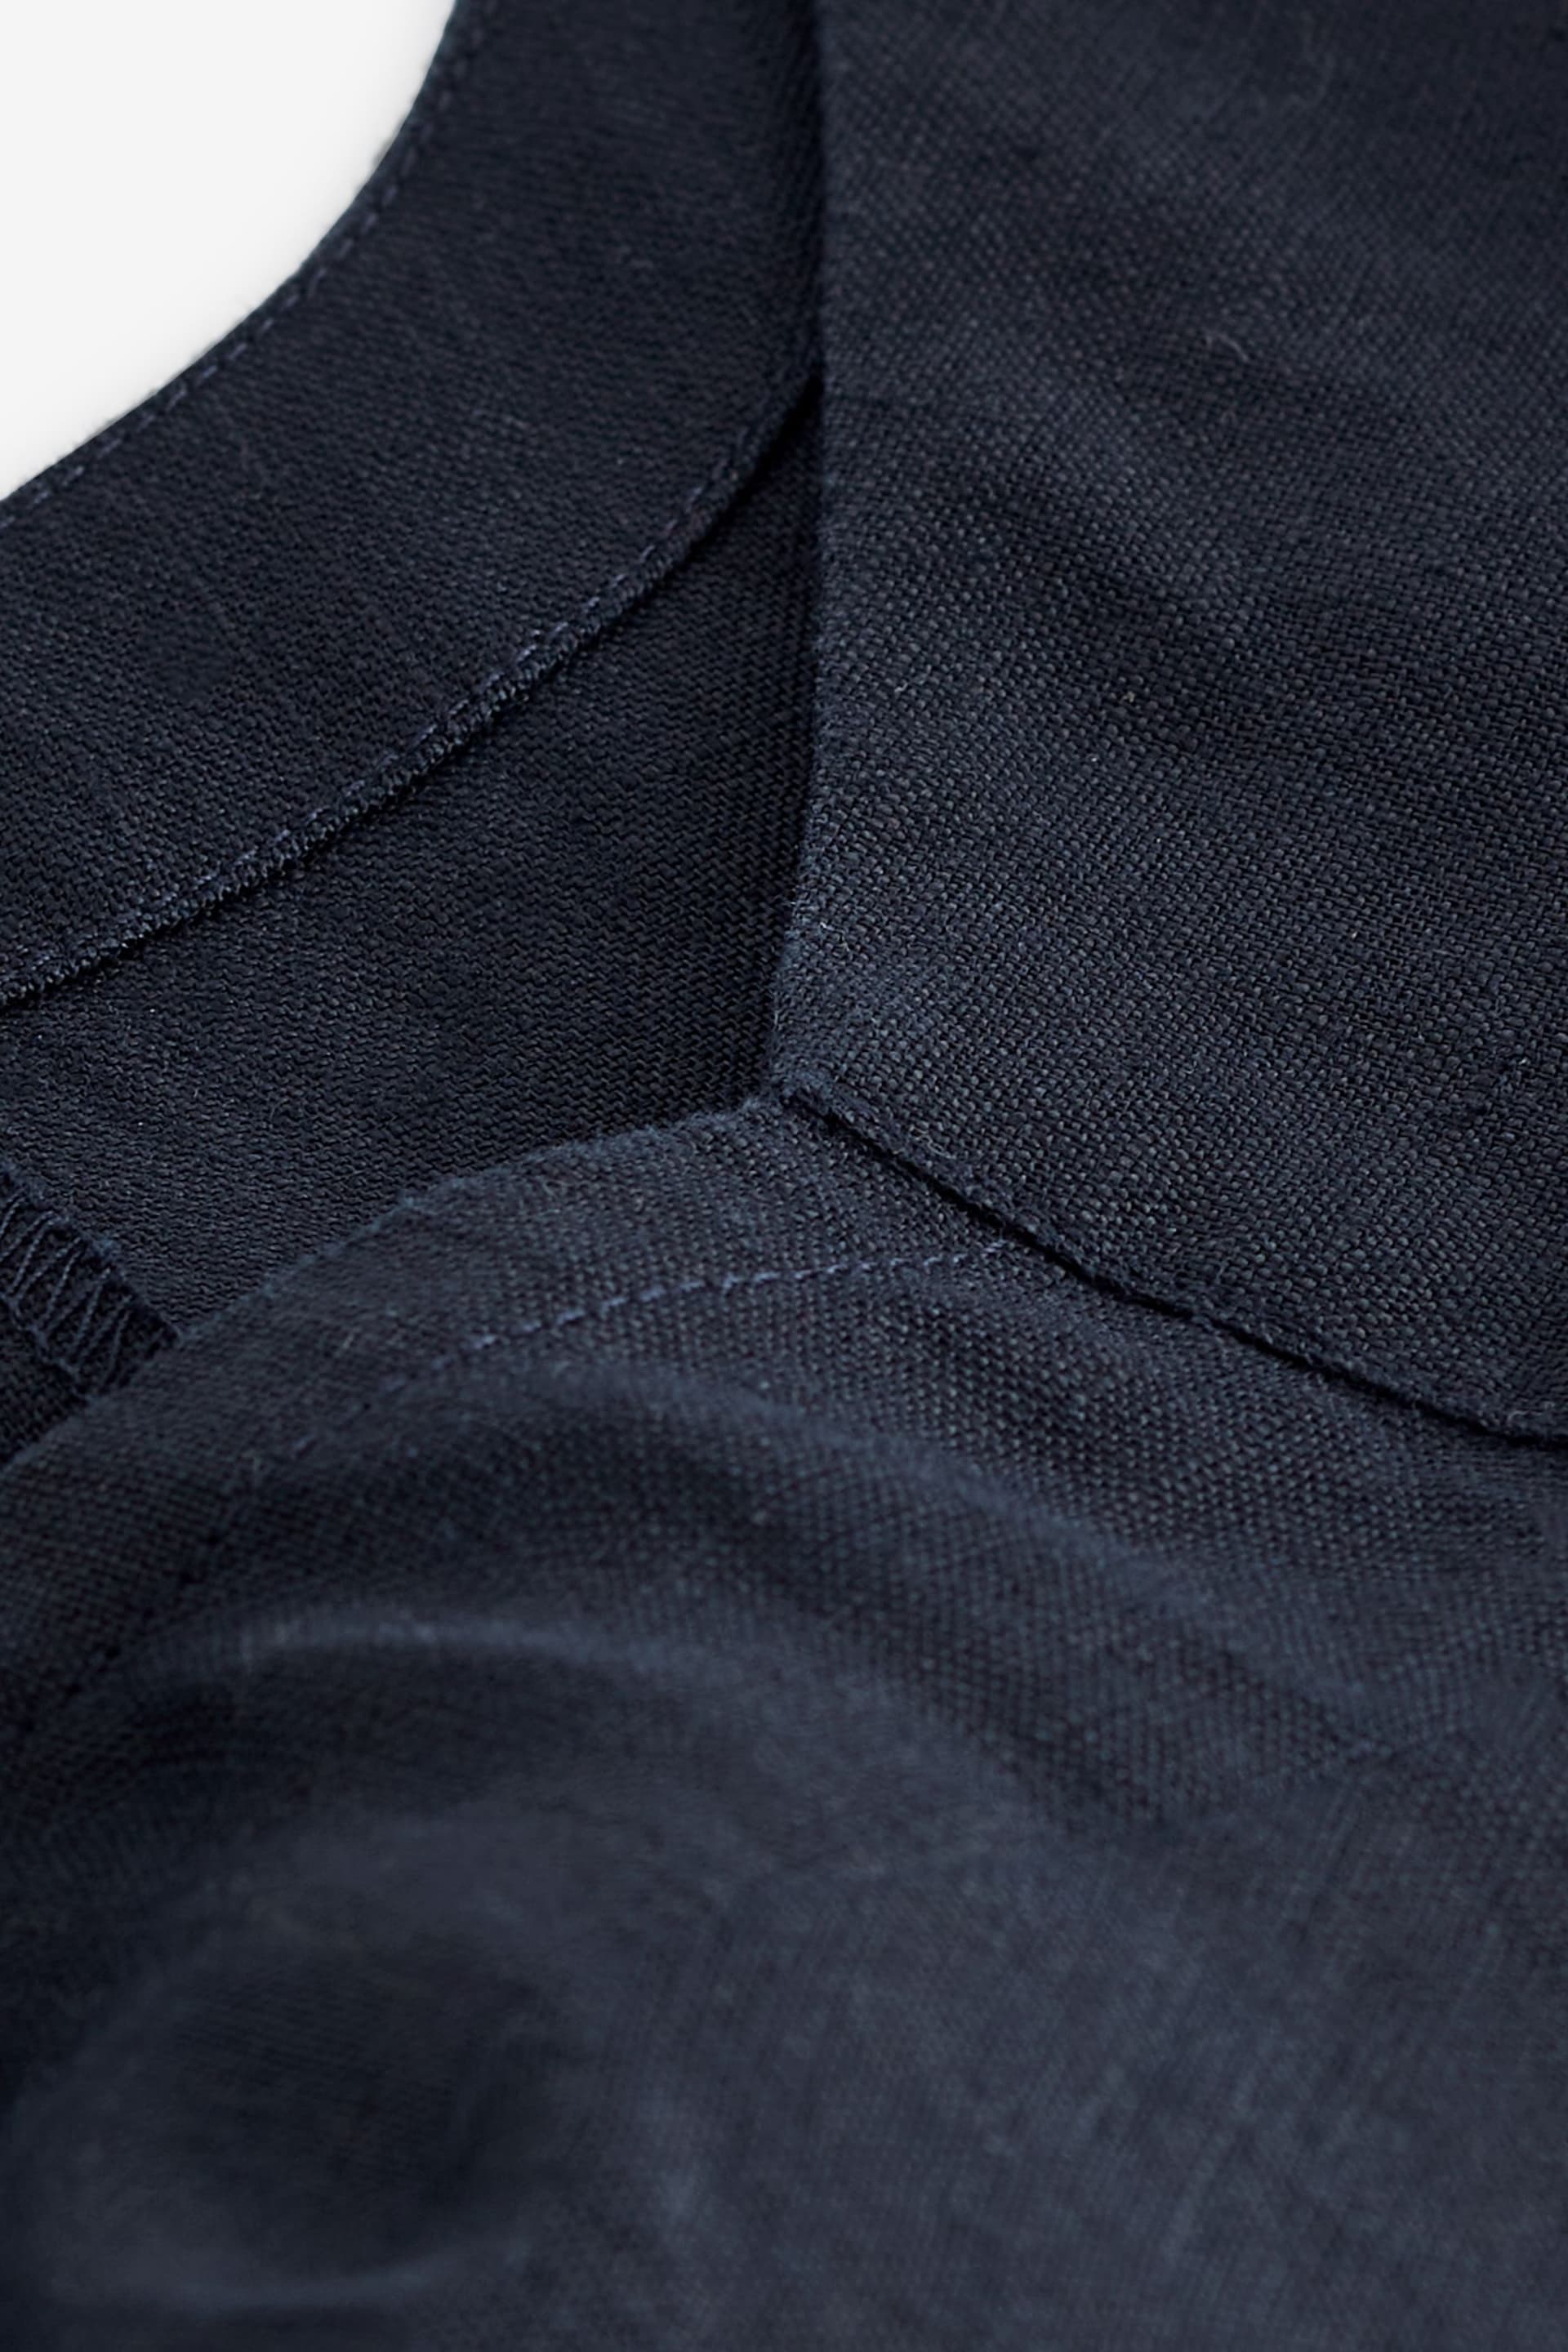 Navy Blue Premium 100% Linen Wrap Top - Image 5 of 5